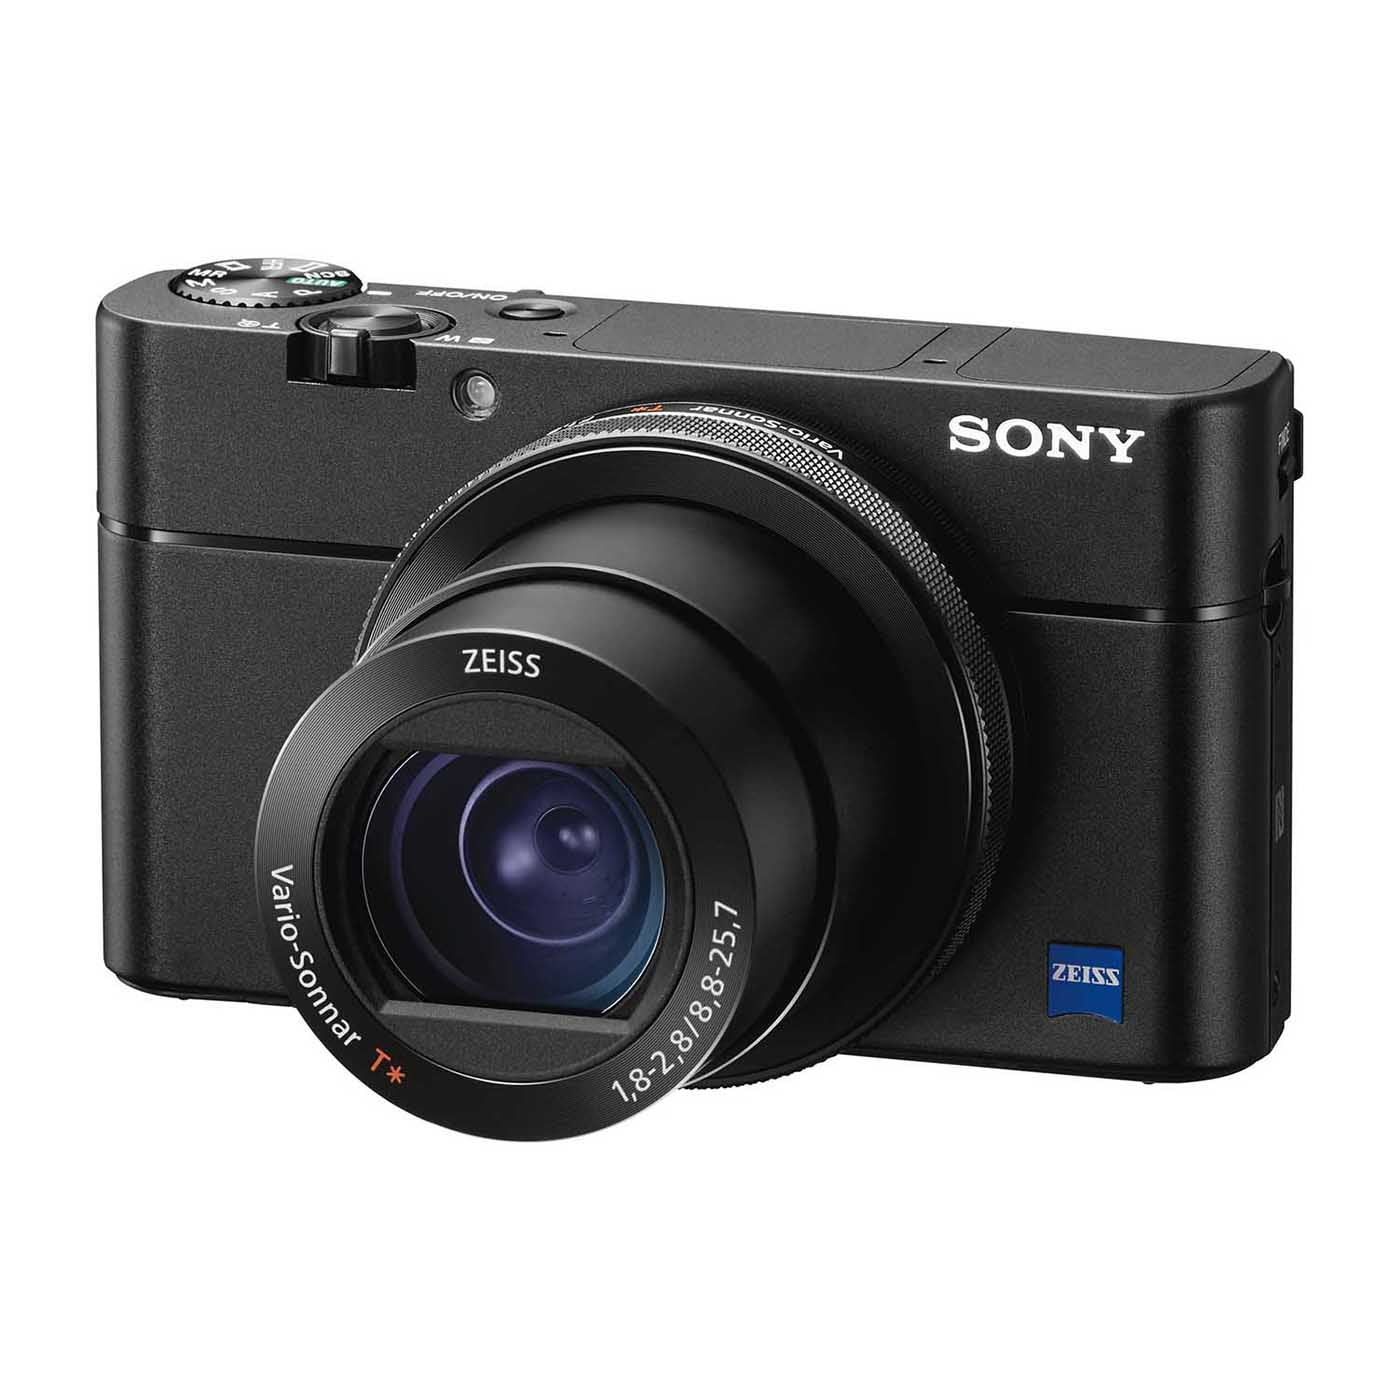 DSC-RX100 V 1.0-type sensor compact camera with superior AF performance